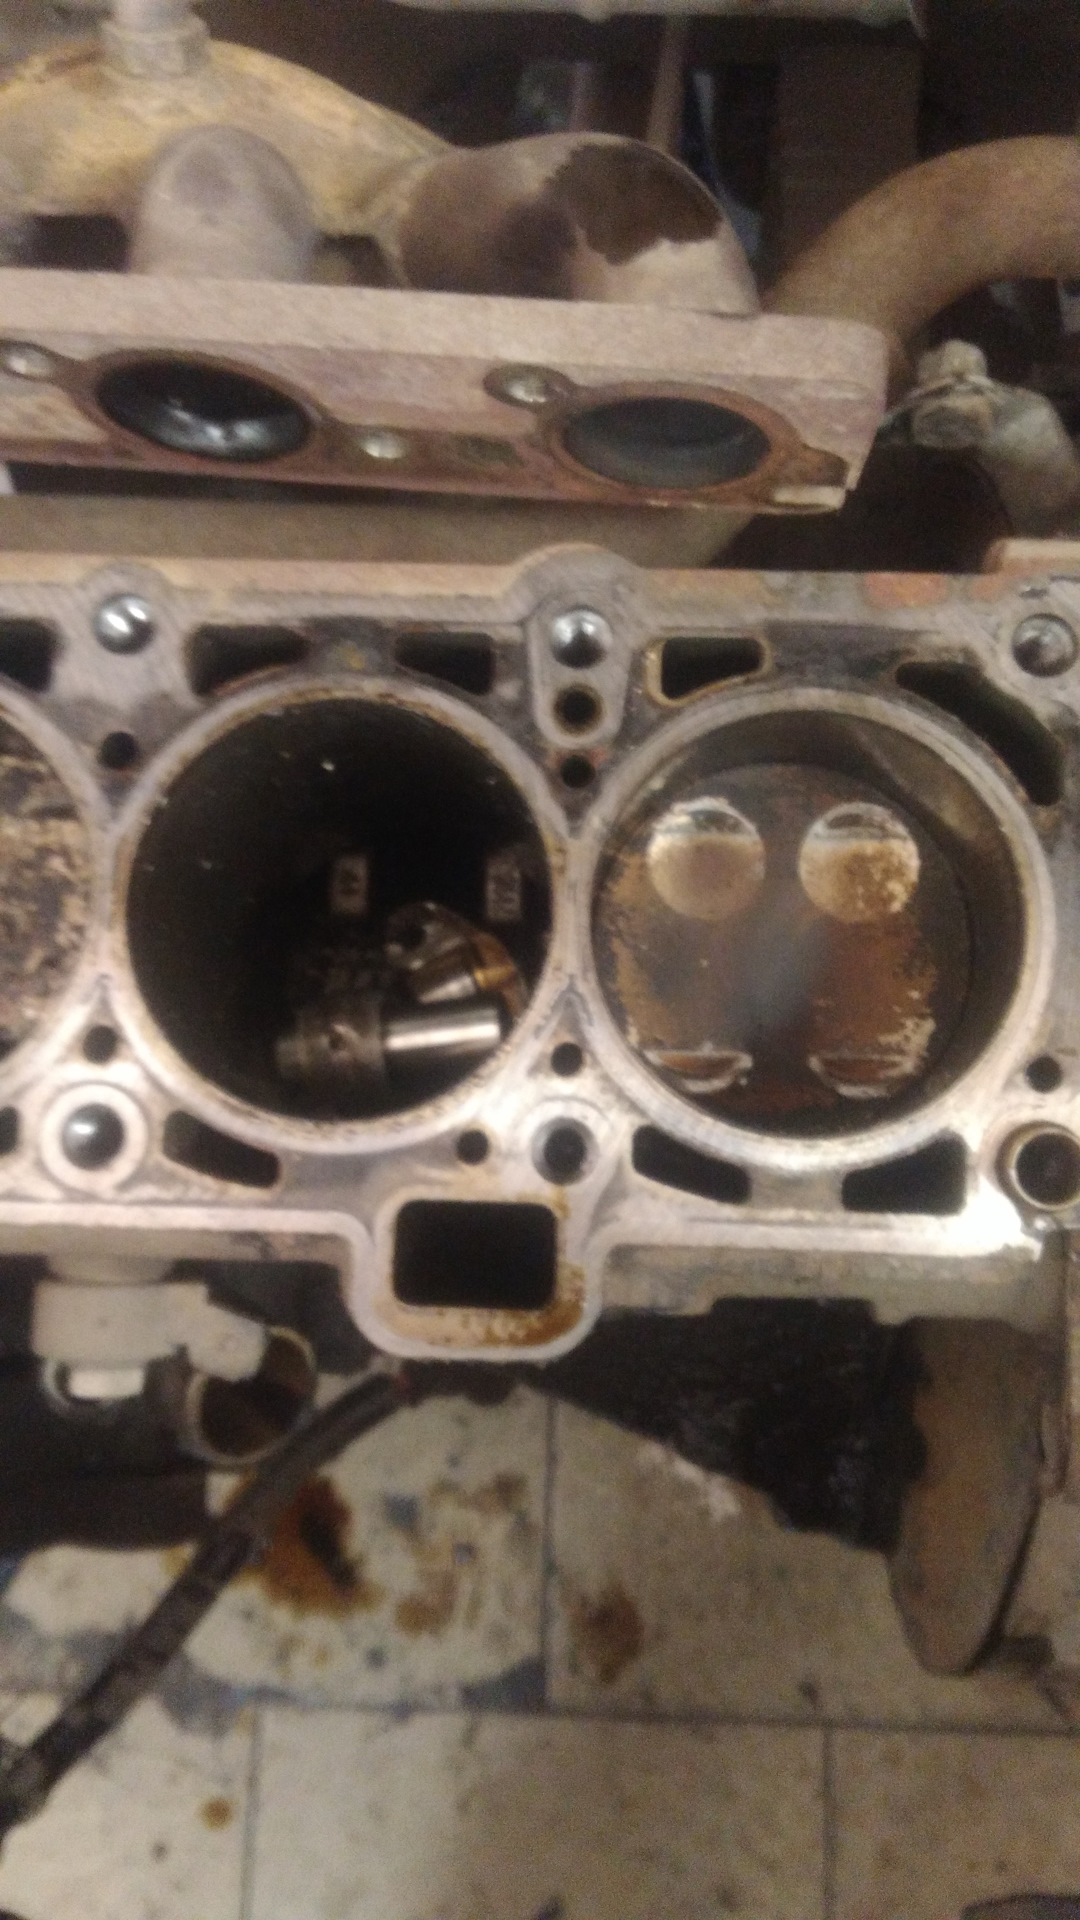 Гнет клапана на гранте 16 клапанов. Двигатель Гранта 8 клапанов 11186 гнет ли клапана. Погнуло клапана Гранта 8 клапанная. Загнуло клапана Приора 16 клапанов. Погнуло клапана Гранта 8 клап.